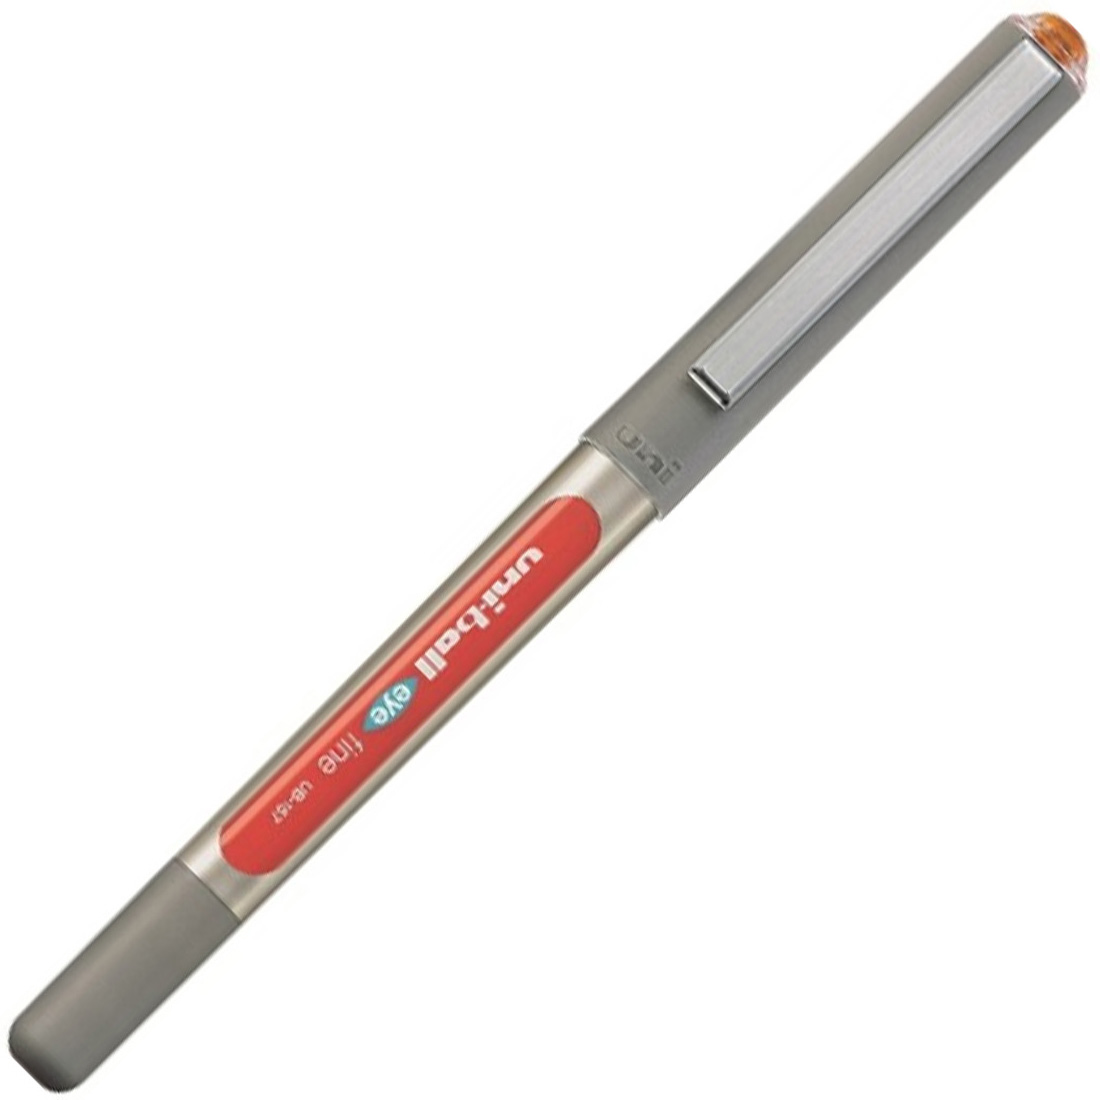 Uniball Rollerball pen, 7mm, Orange, Ub-157